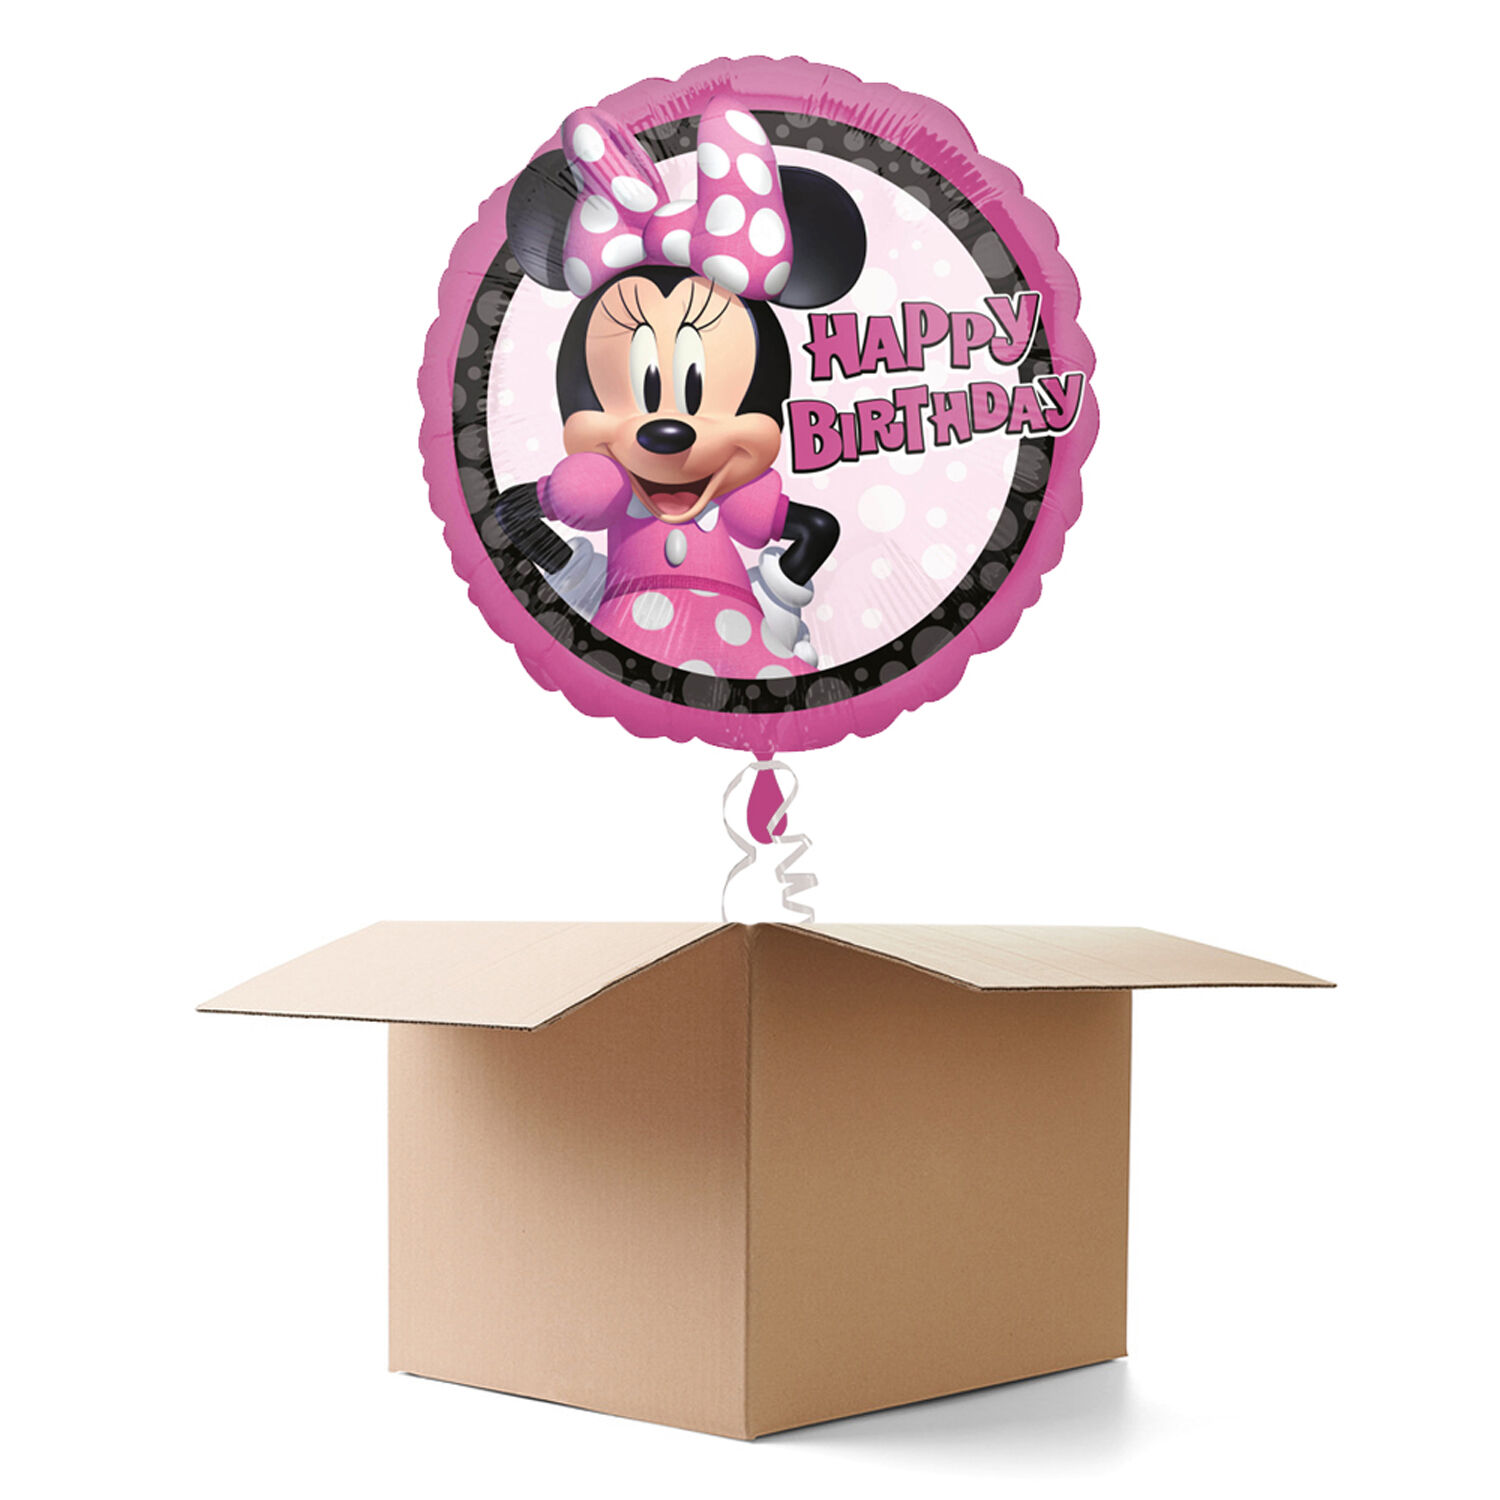 NEU Ballongrüsse Minnie Mouse Forever HBD, 1 Ballon